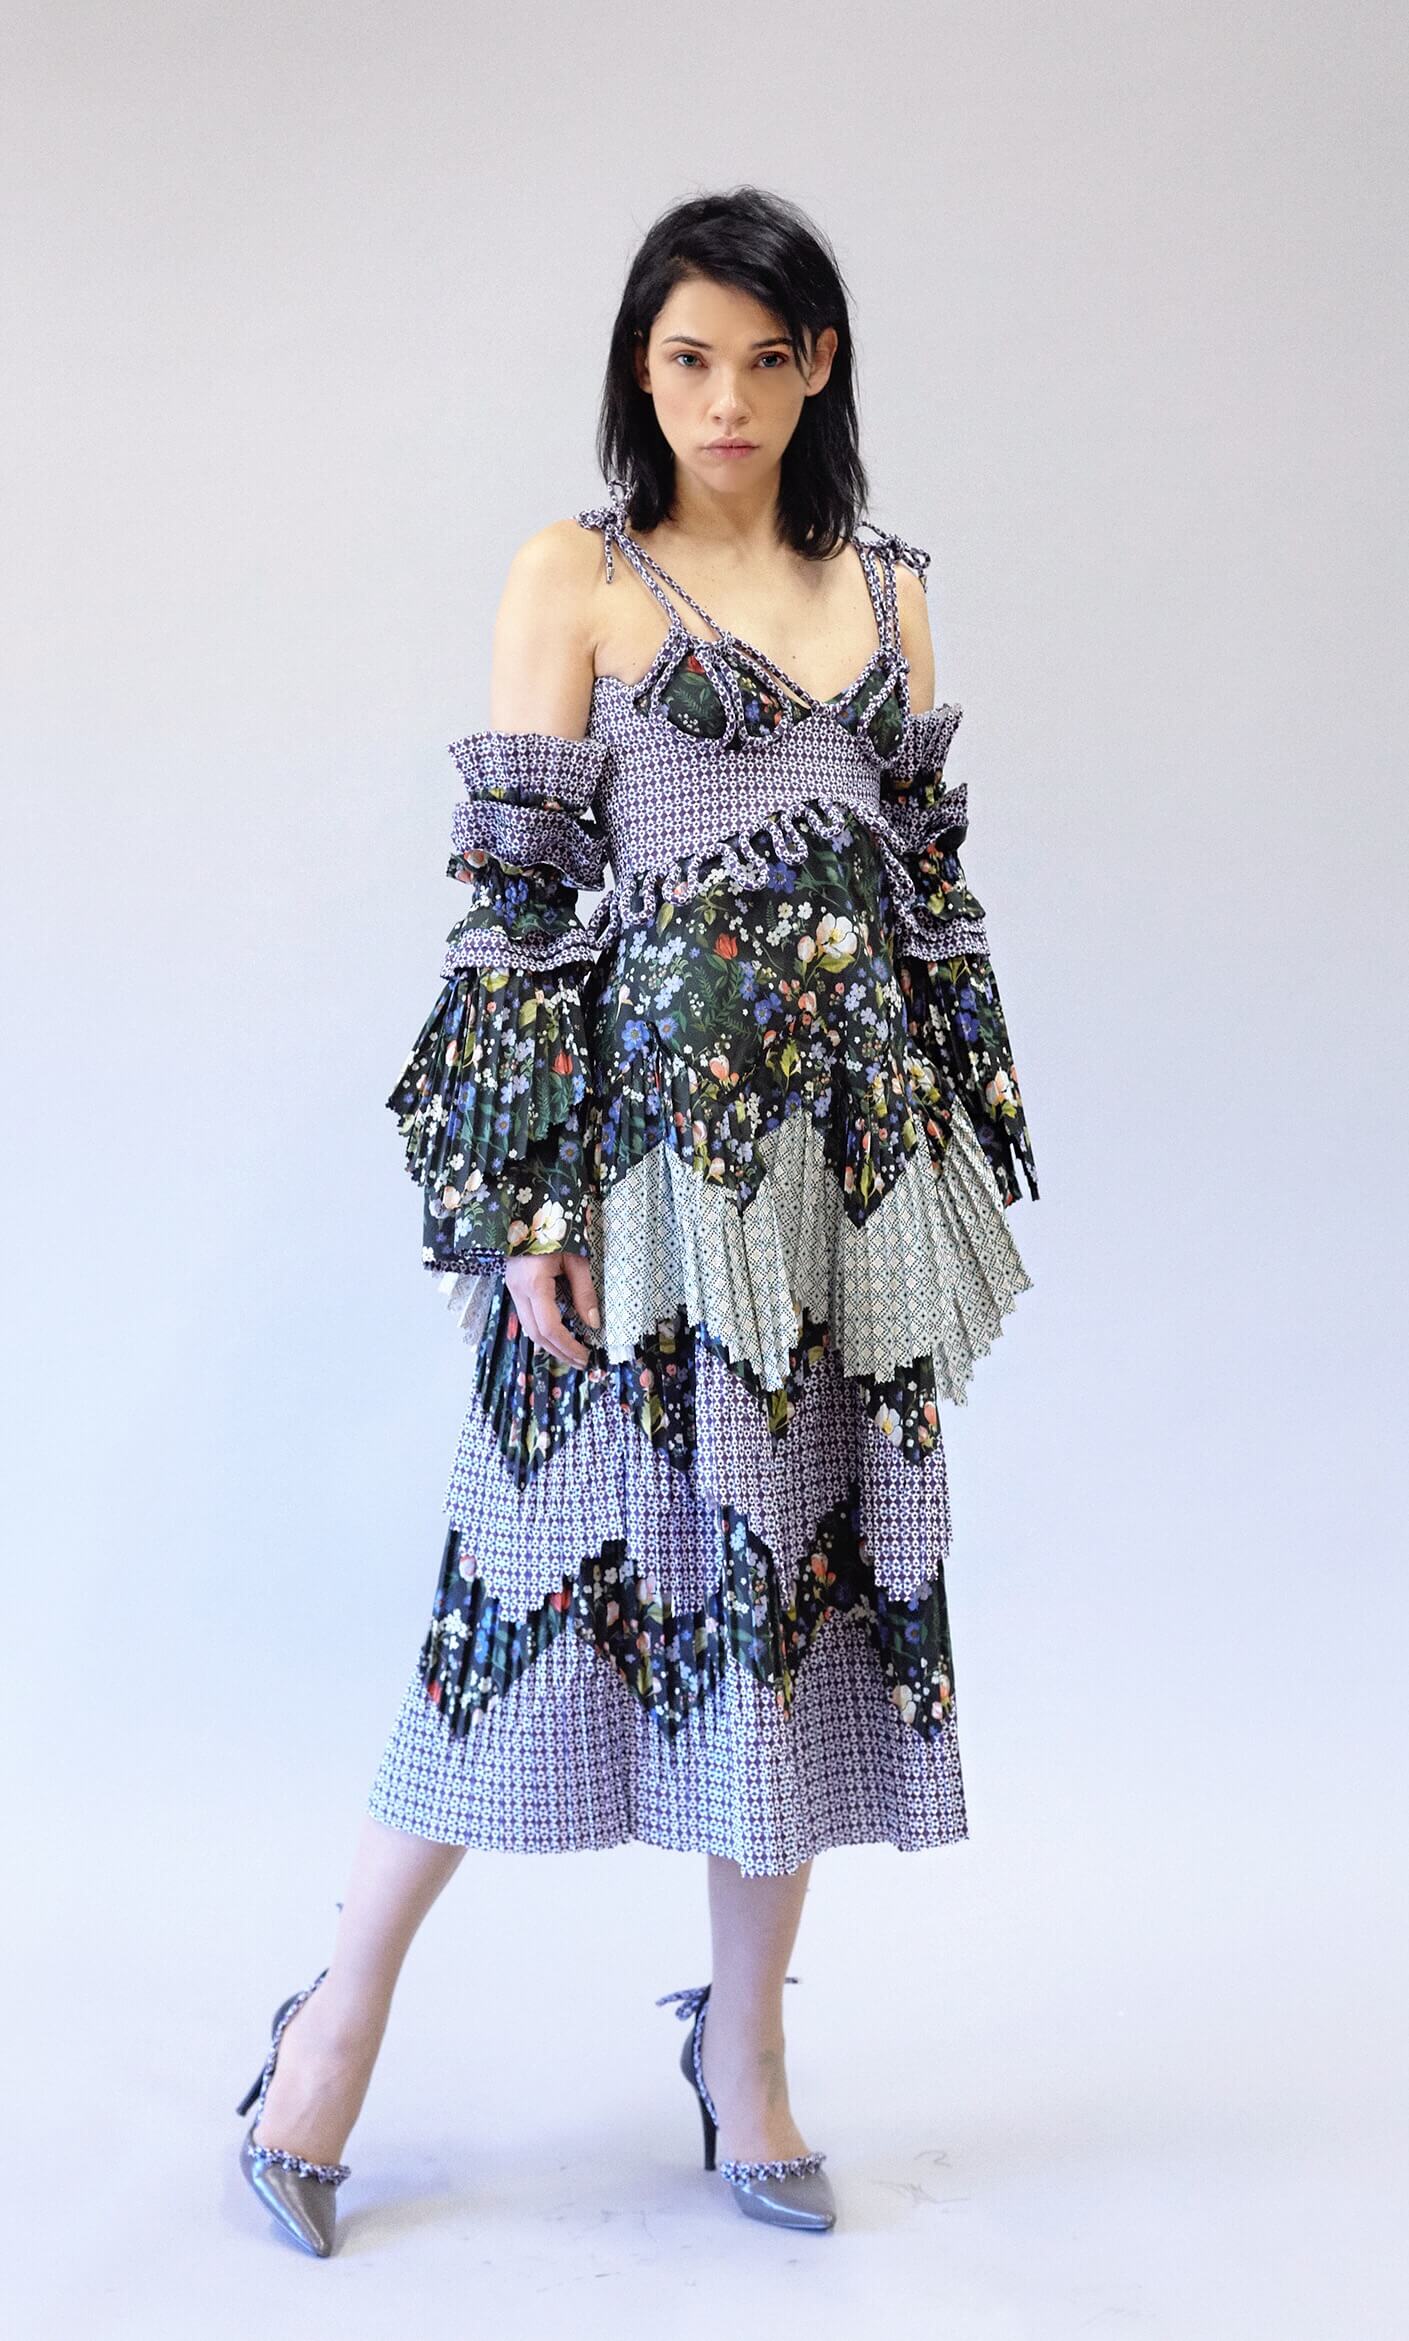 Mid-length Pleated Dress in Liberty London Heidi & Tempo fabric.